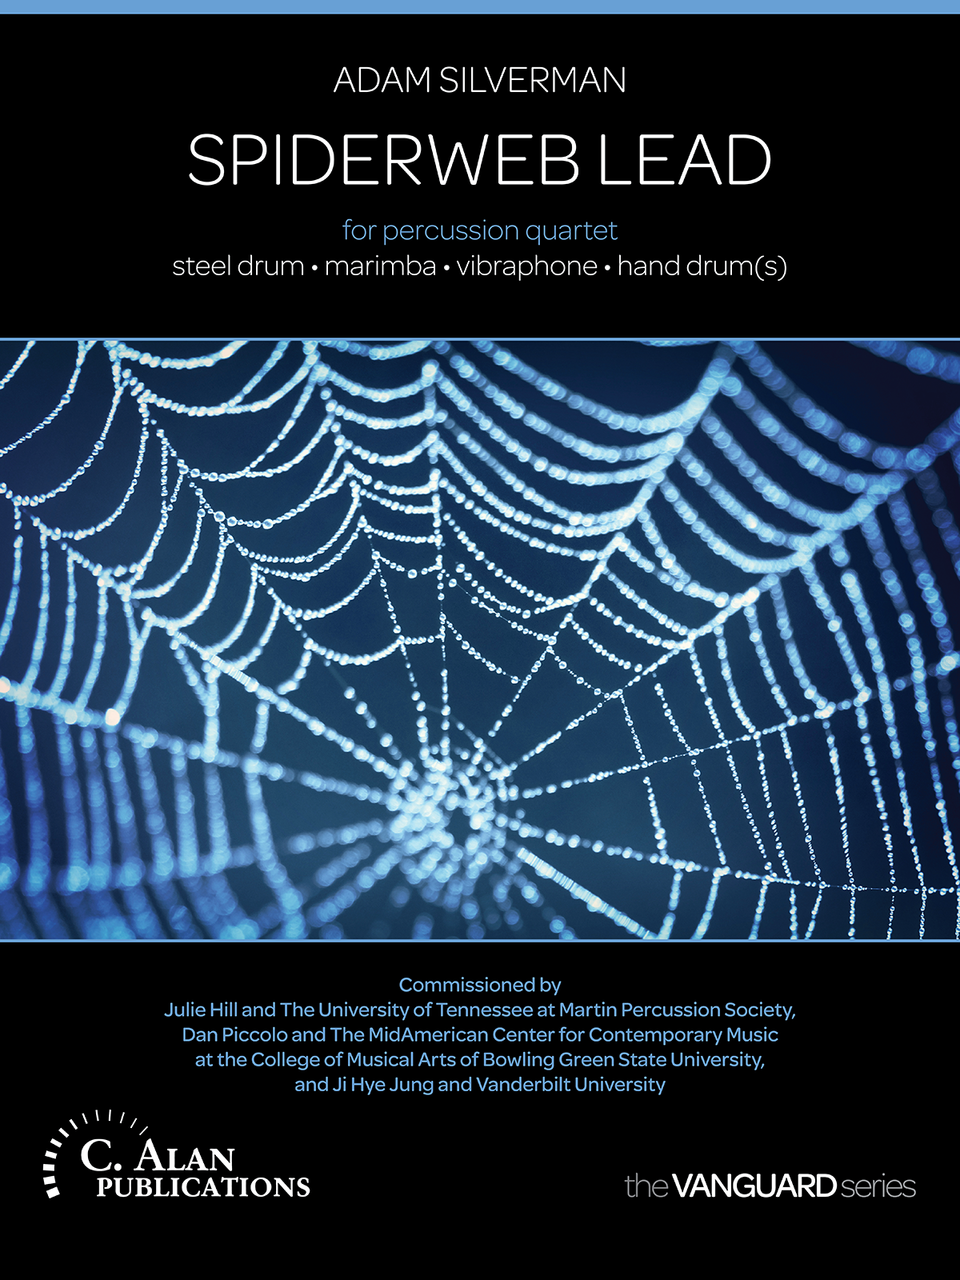 Spiderweb Lead by Adam Silverman